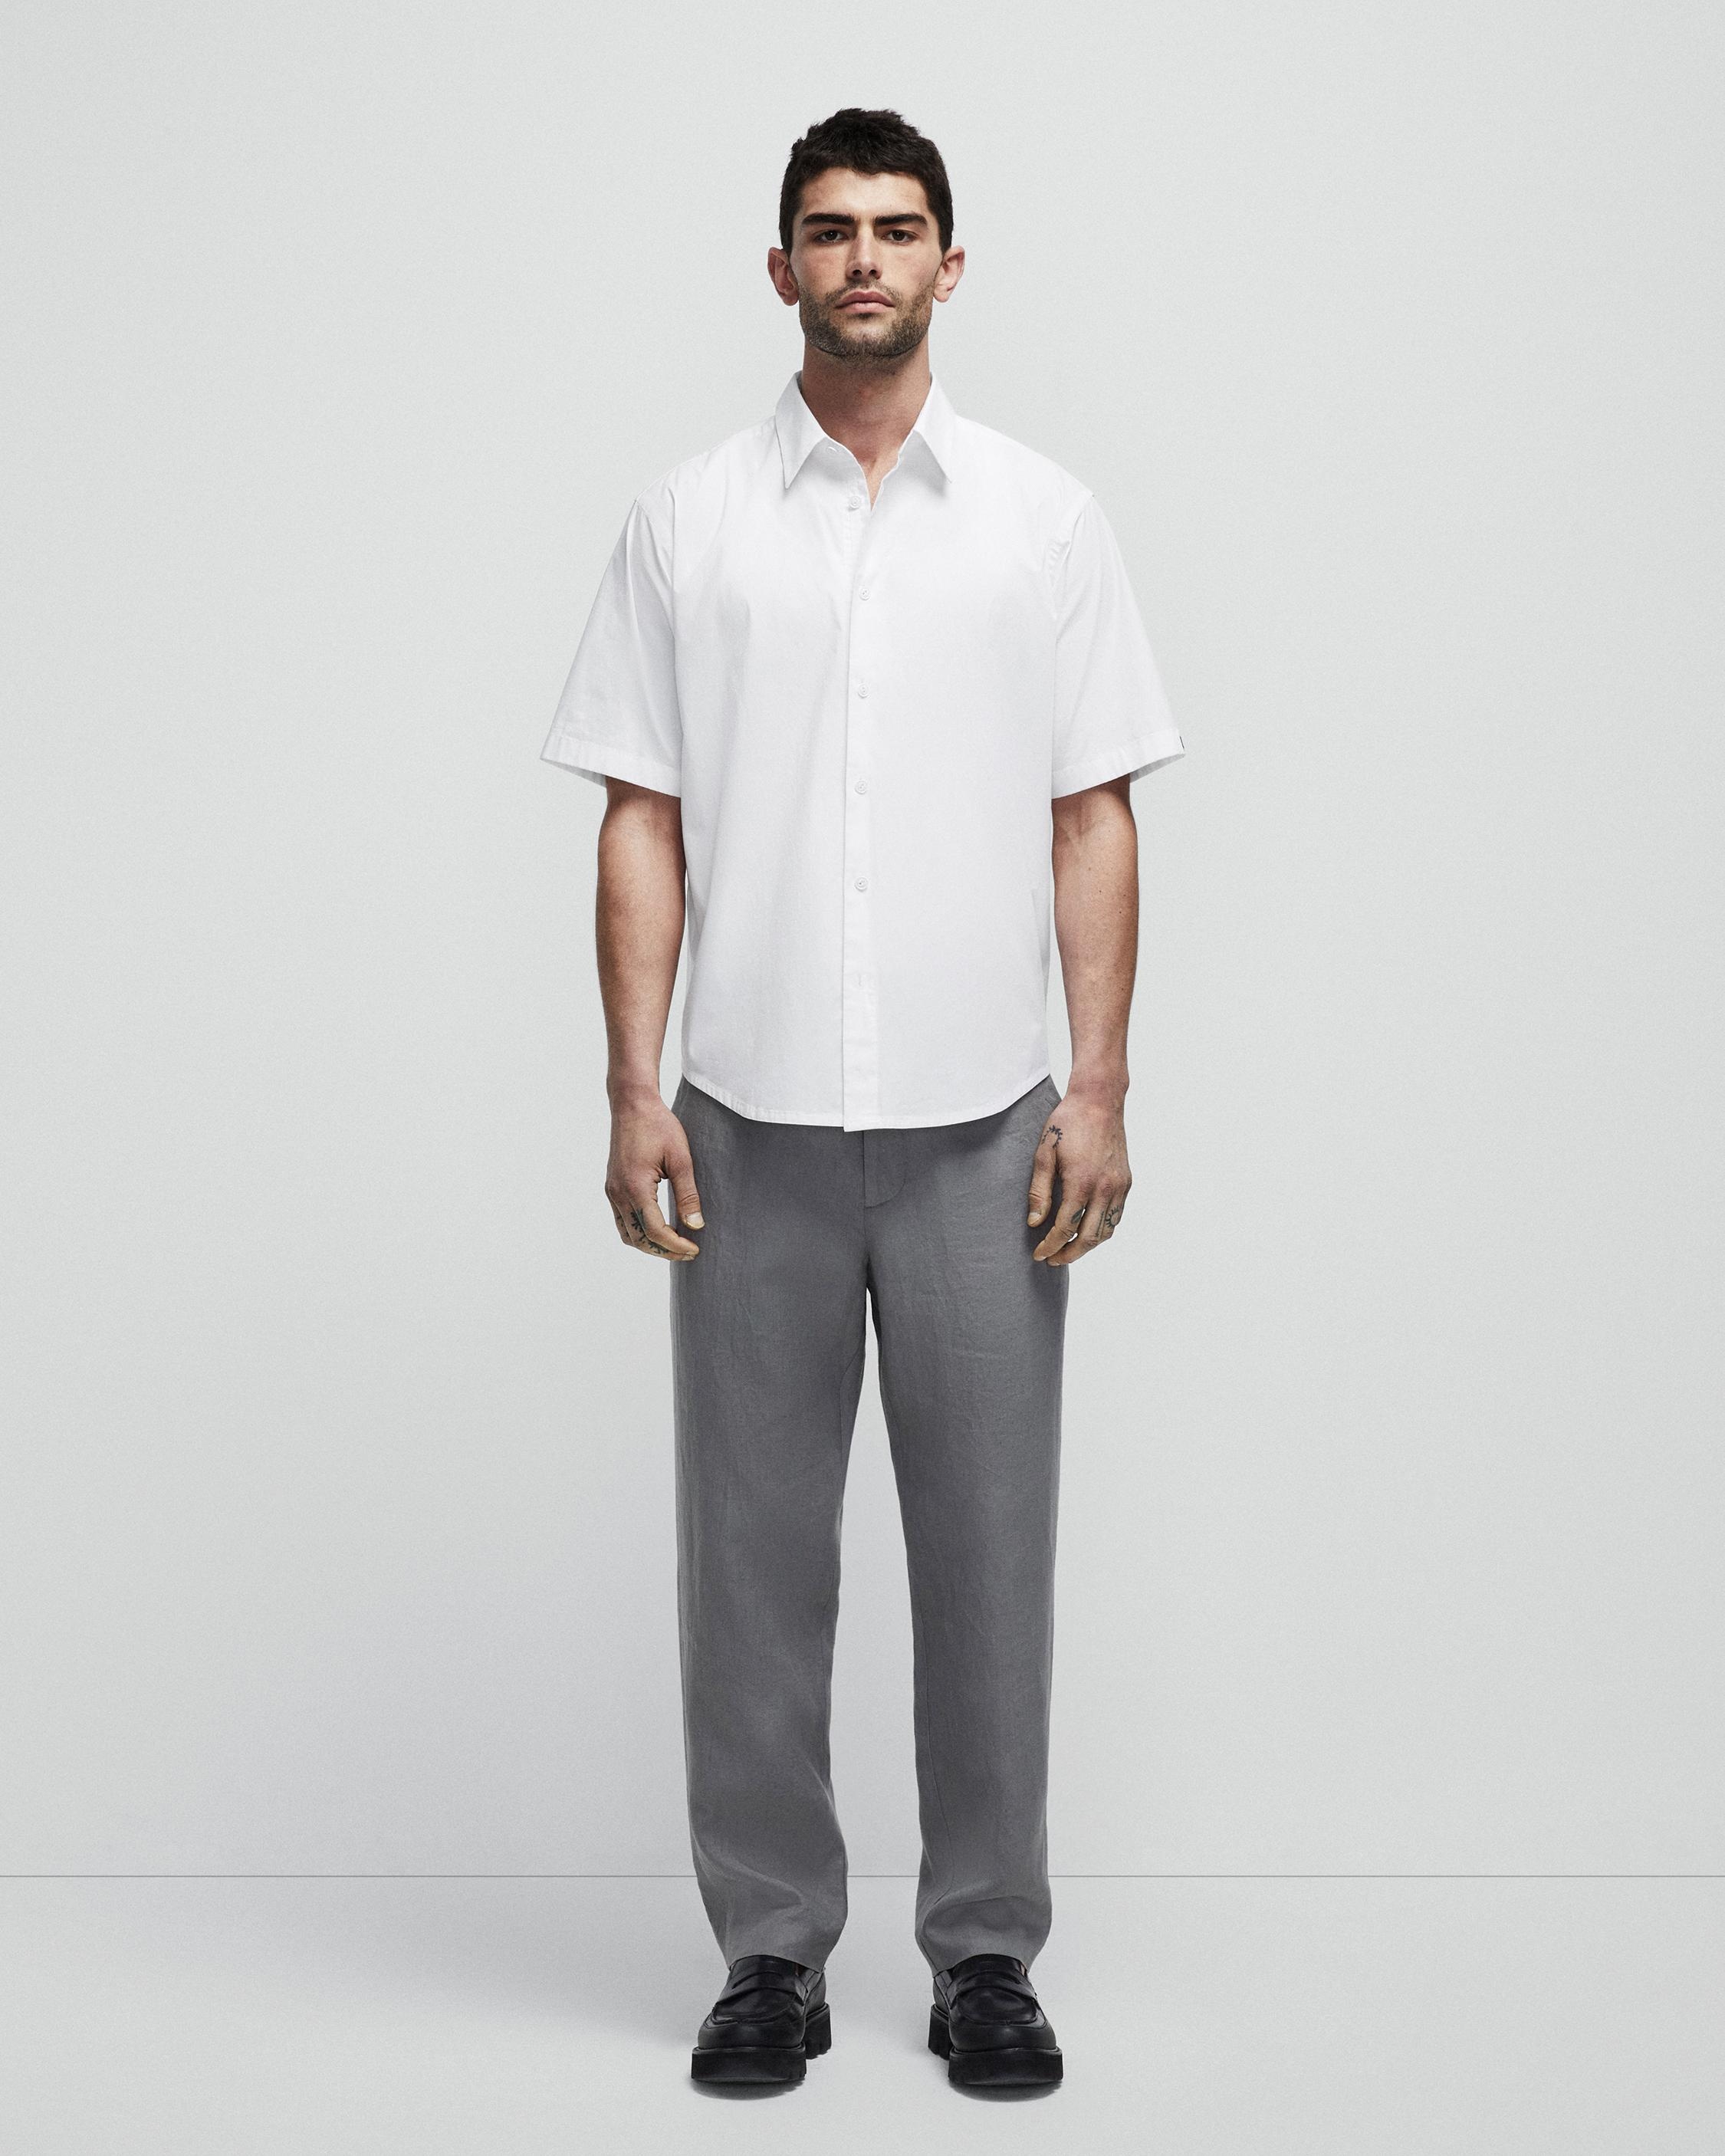 Moore Cotton Poplin Shirt
Relaxed Fit Shirt - 3